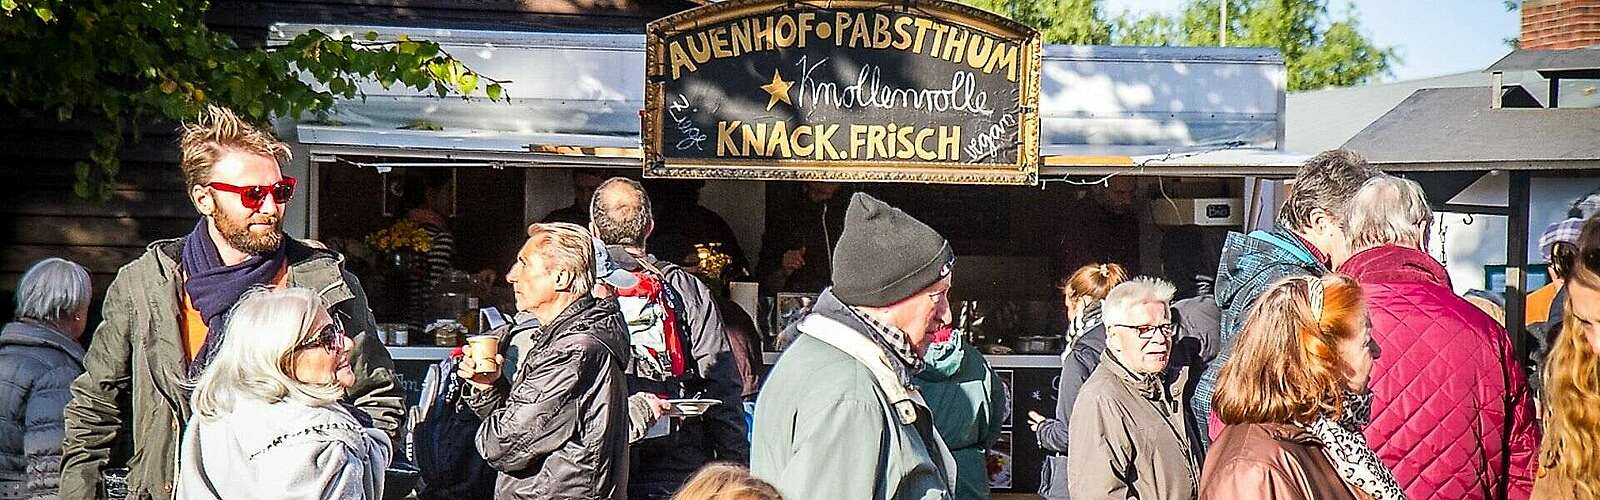 Foodtruck Knack.frisch,
        
    

        Foto: Knack.frisch Neuruppin/Fotograf / Lizenz - Media Import